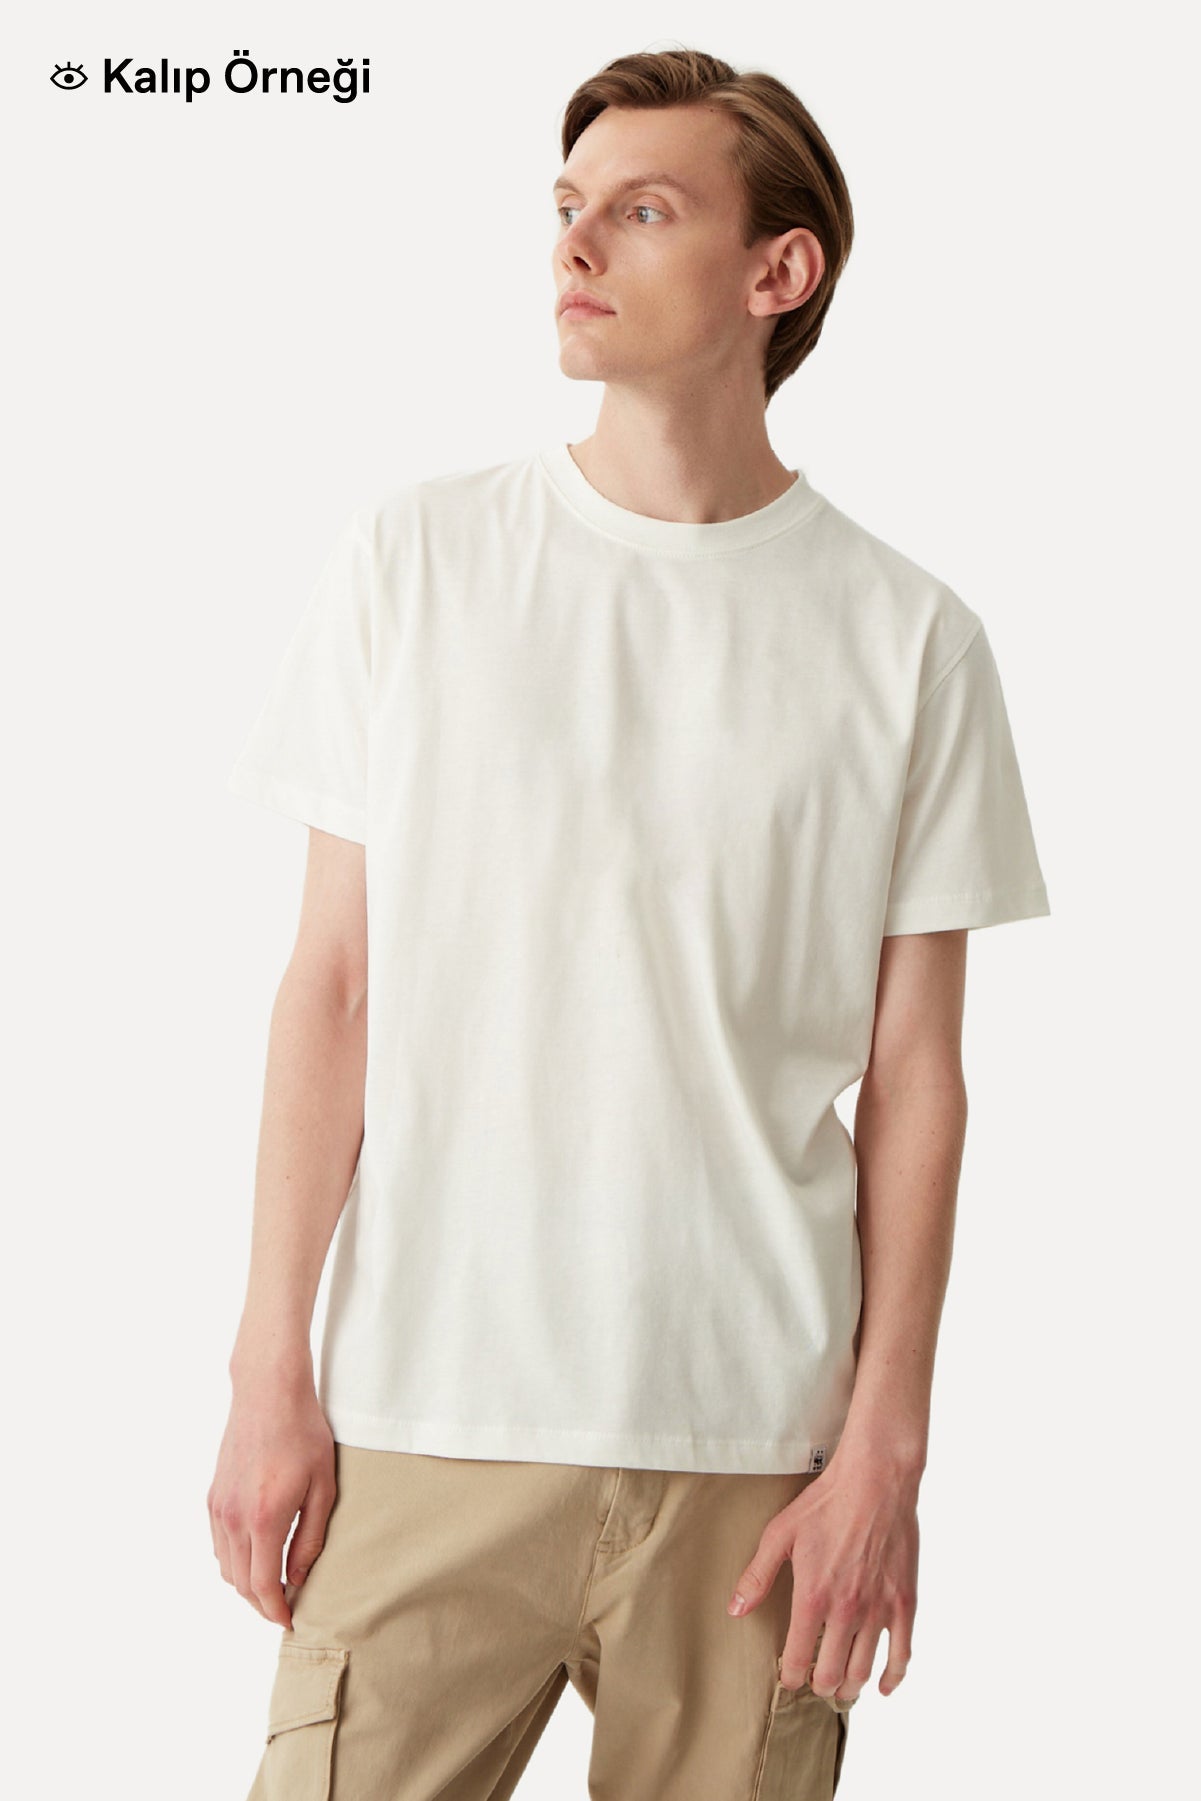 Kızıl Tilki Soft T-Shirt - Lacivert